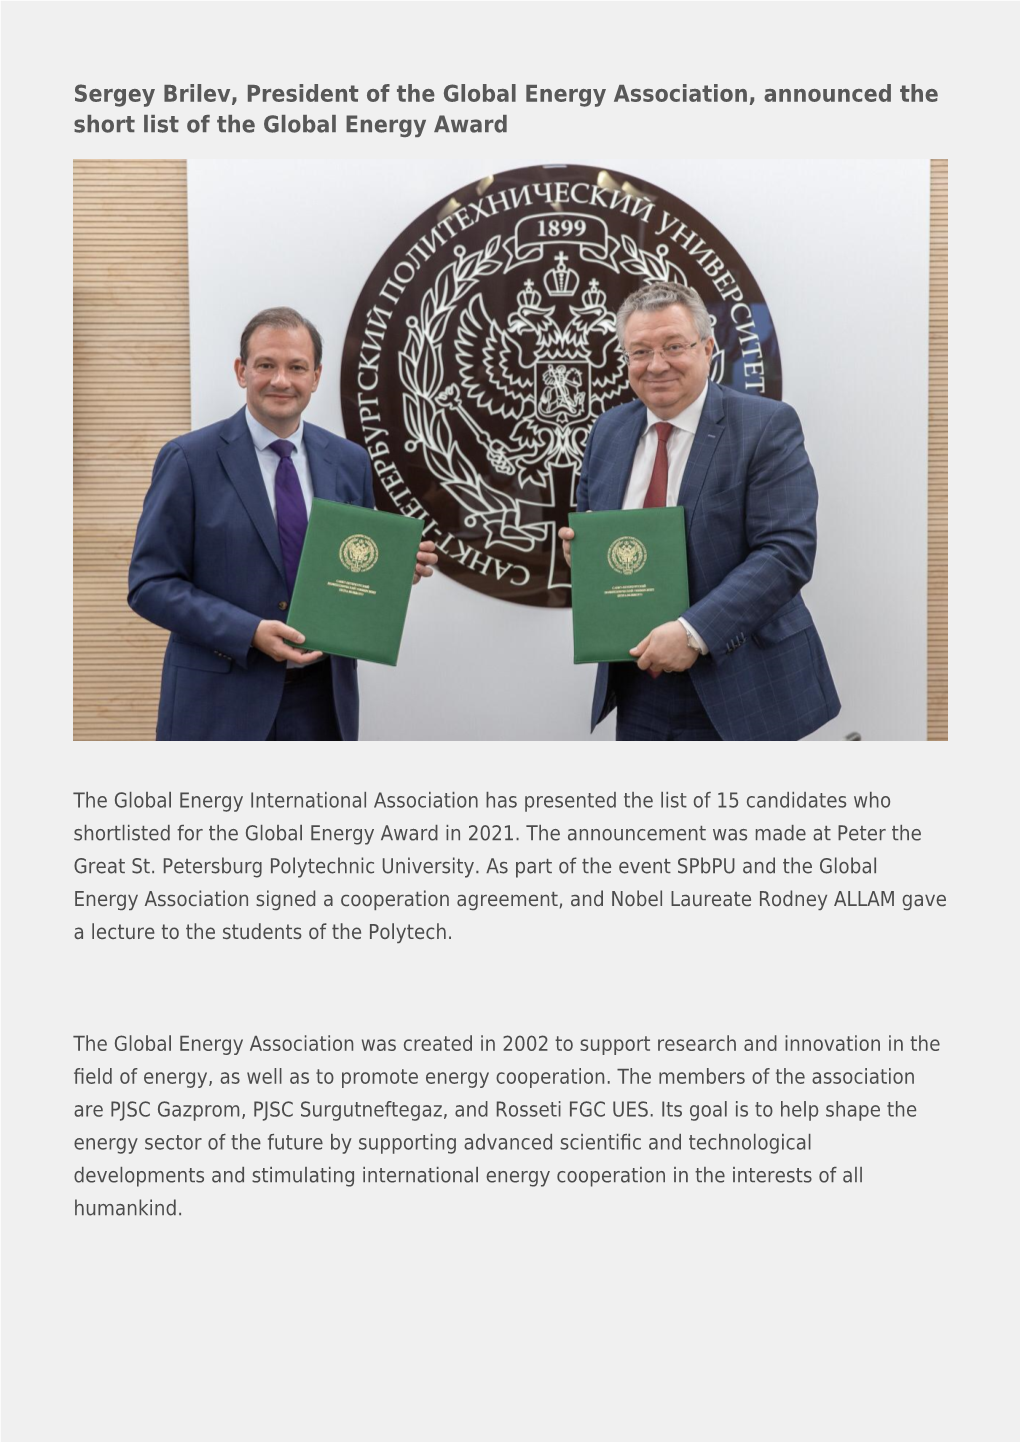 Sergey Brilev, President of the Global Energy Association, Announced the Short List of the Global Energy Award